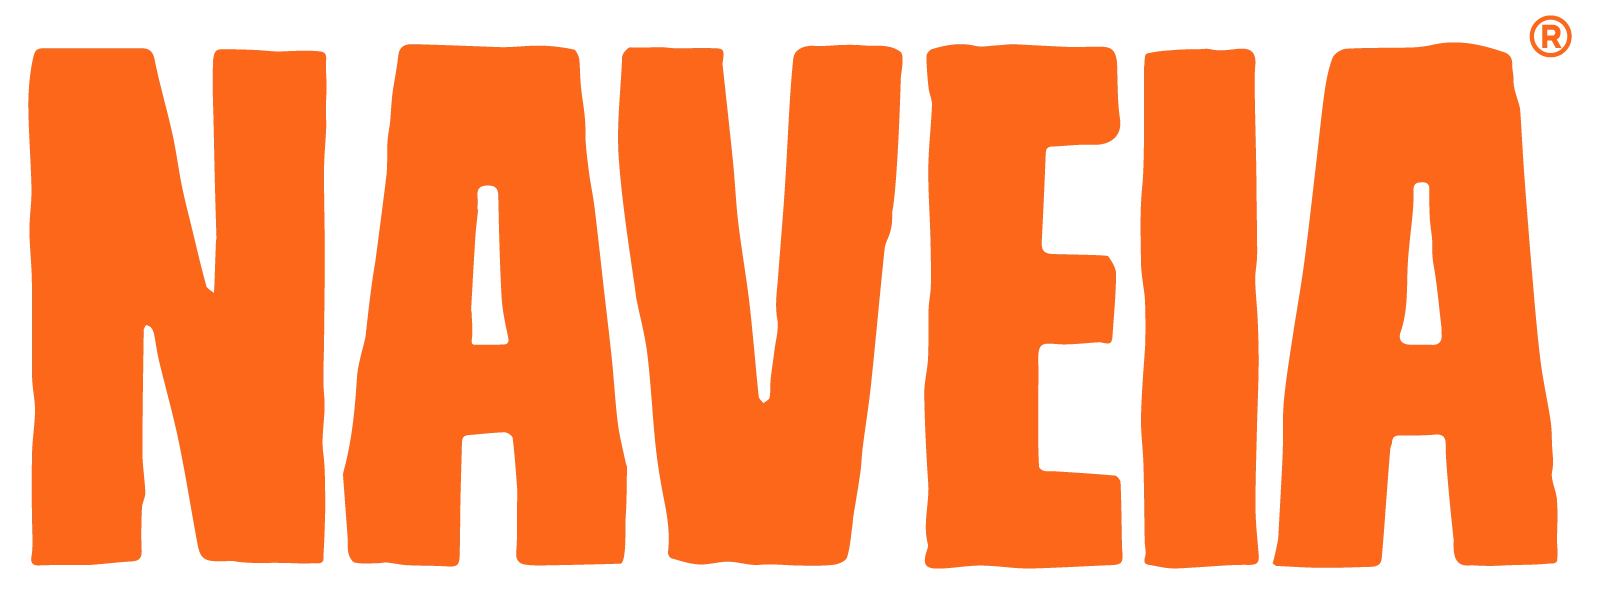 logo-naveia-laranja-2-1600x-1692042979